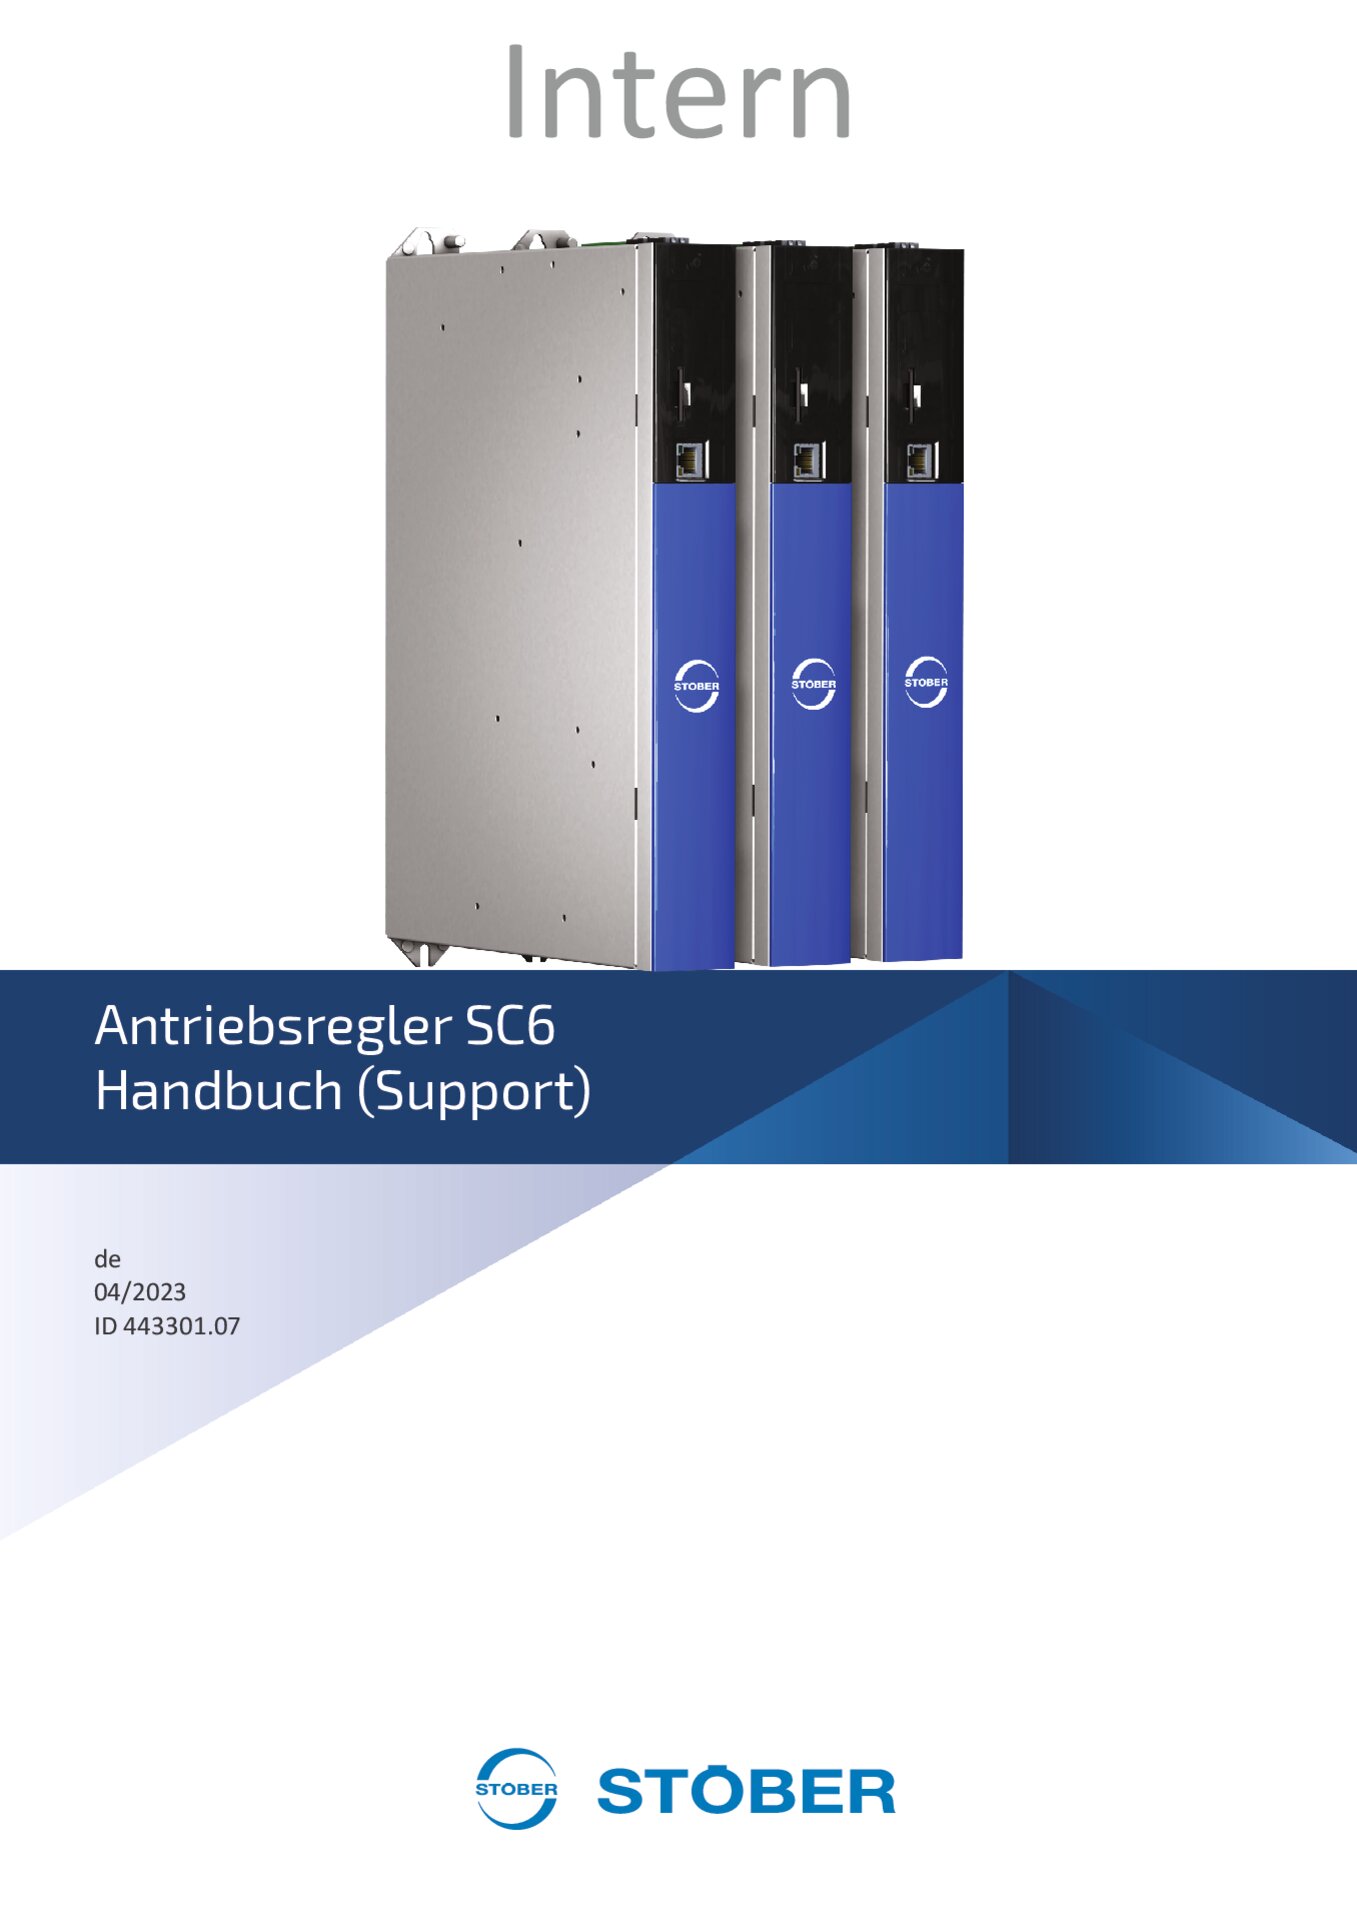 Handbuch SC6 - Support